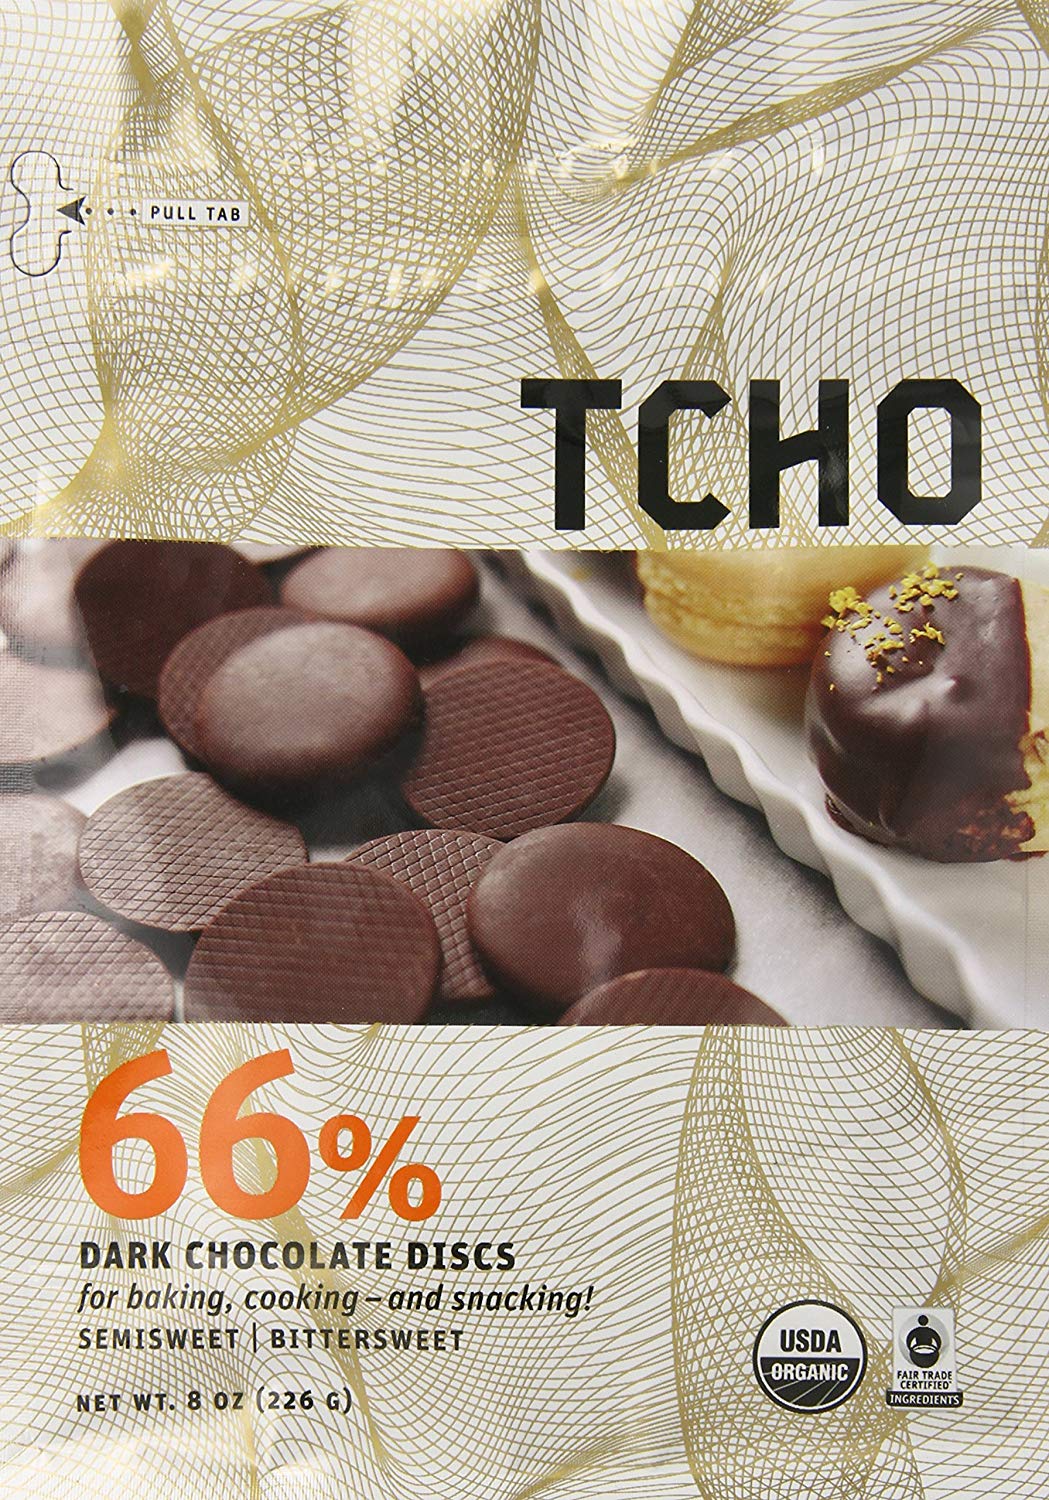 Bag of TCHO Chocolate Discs